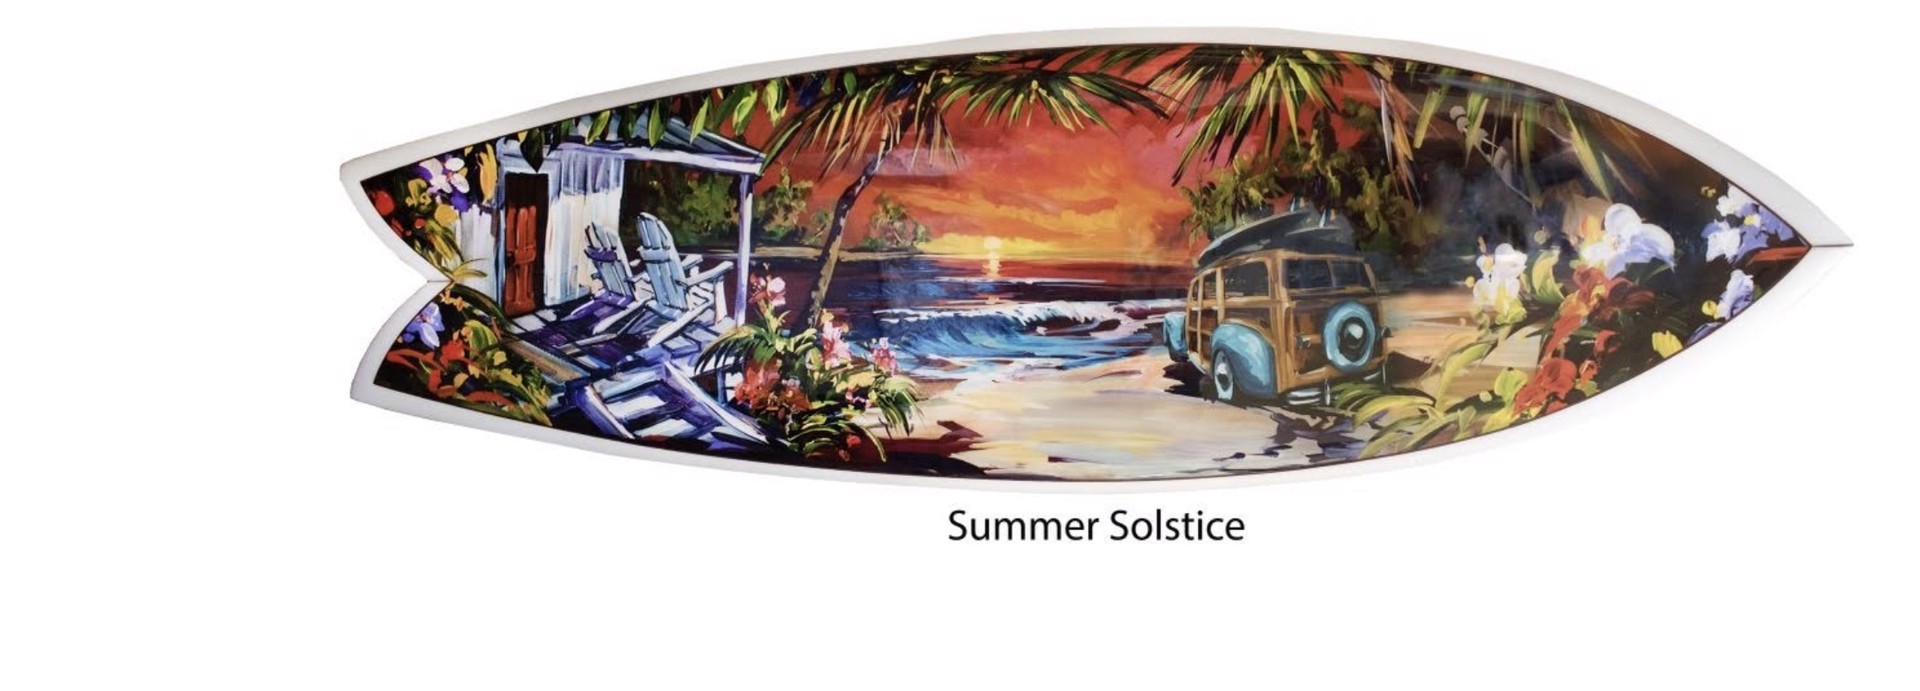 Summer Solstice by Steve Barton